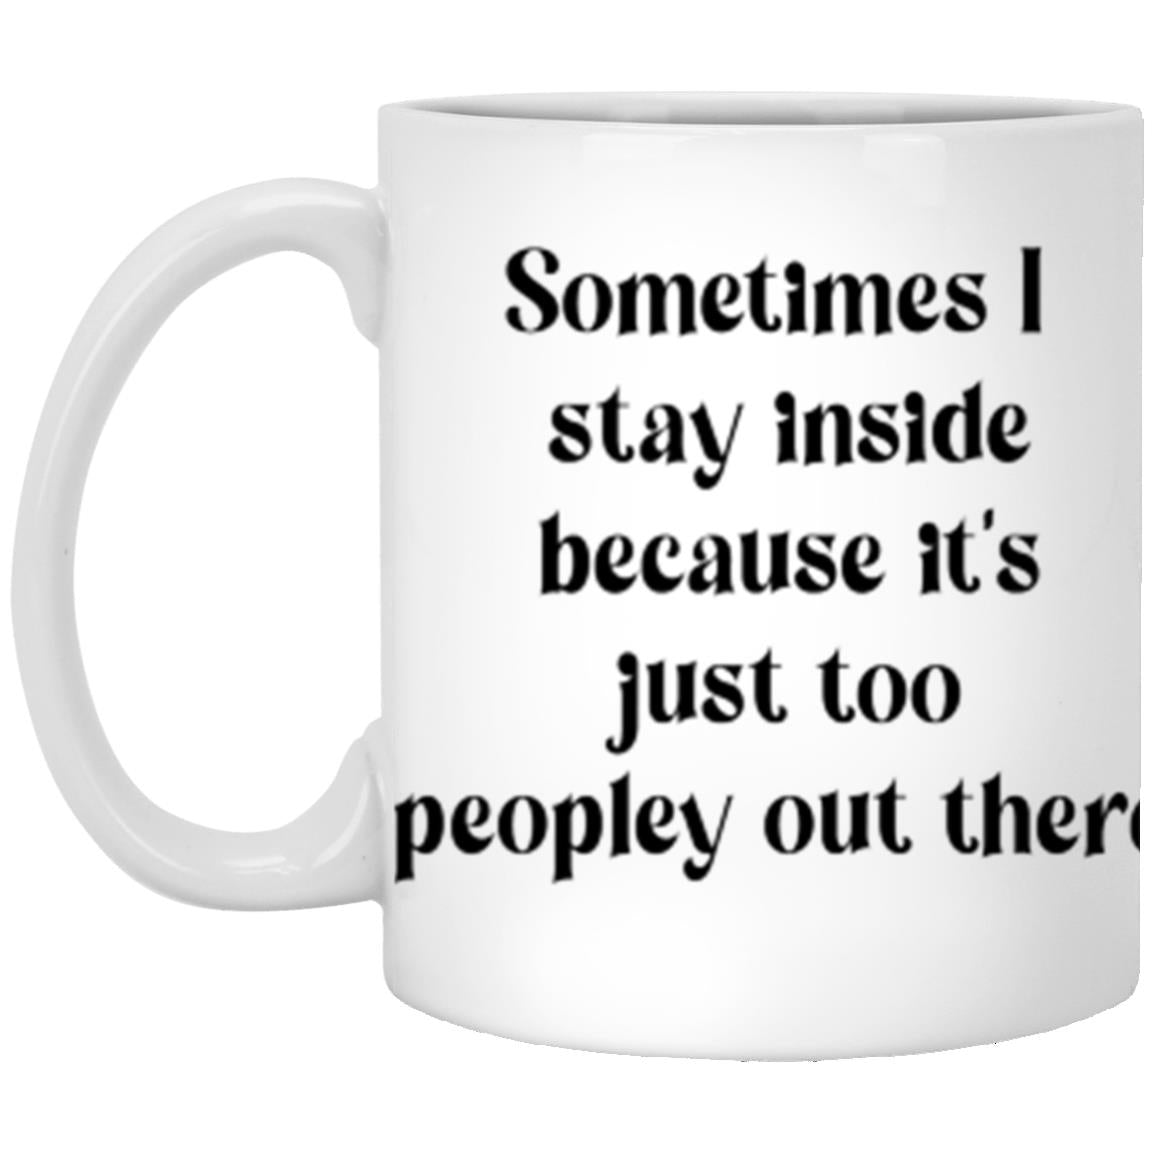 Sometimes I stay insinde Story mug